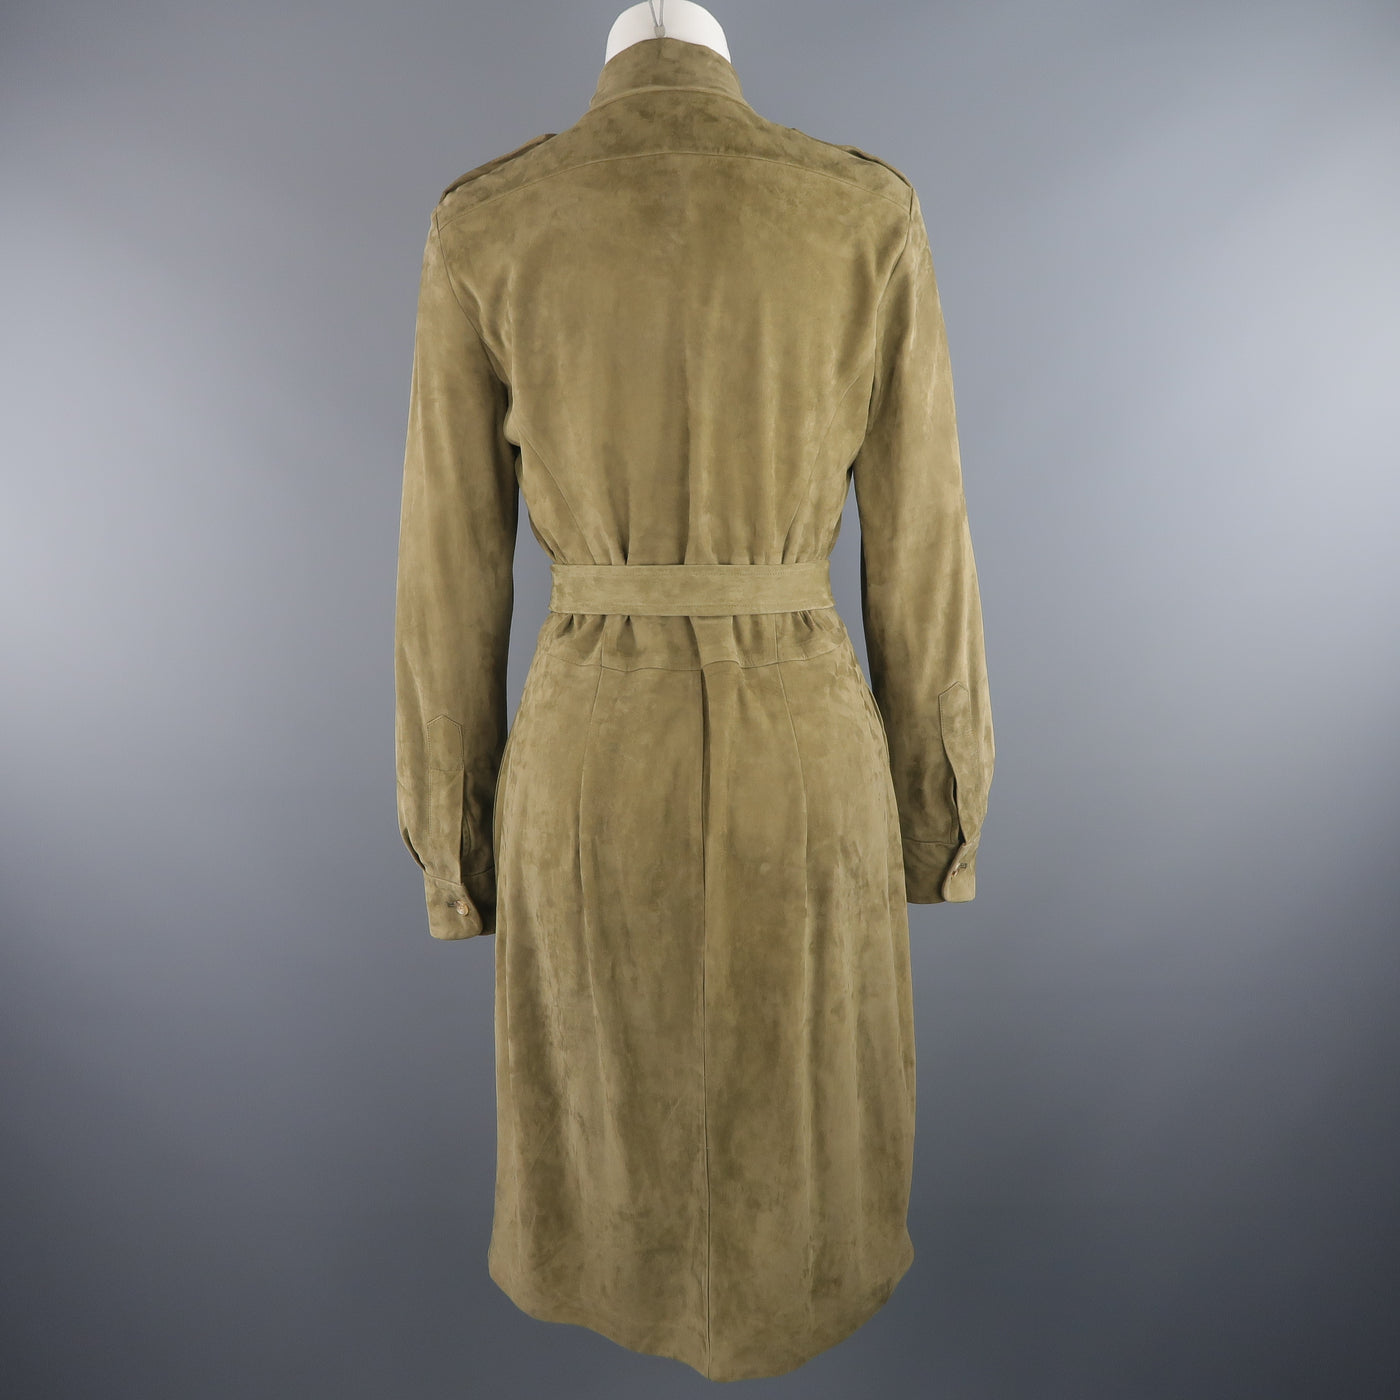 RALPH LAUREN COLLECTION Size 8 Olive Green Suede Safari Dress